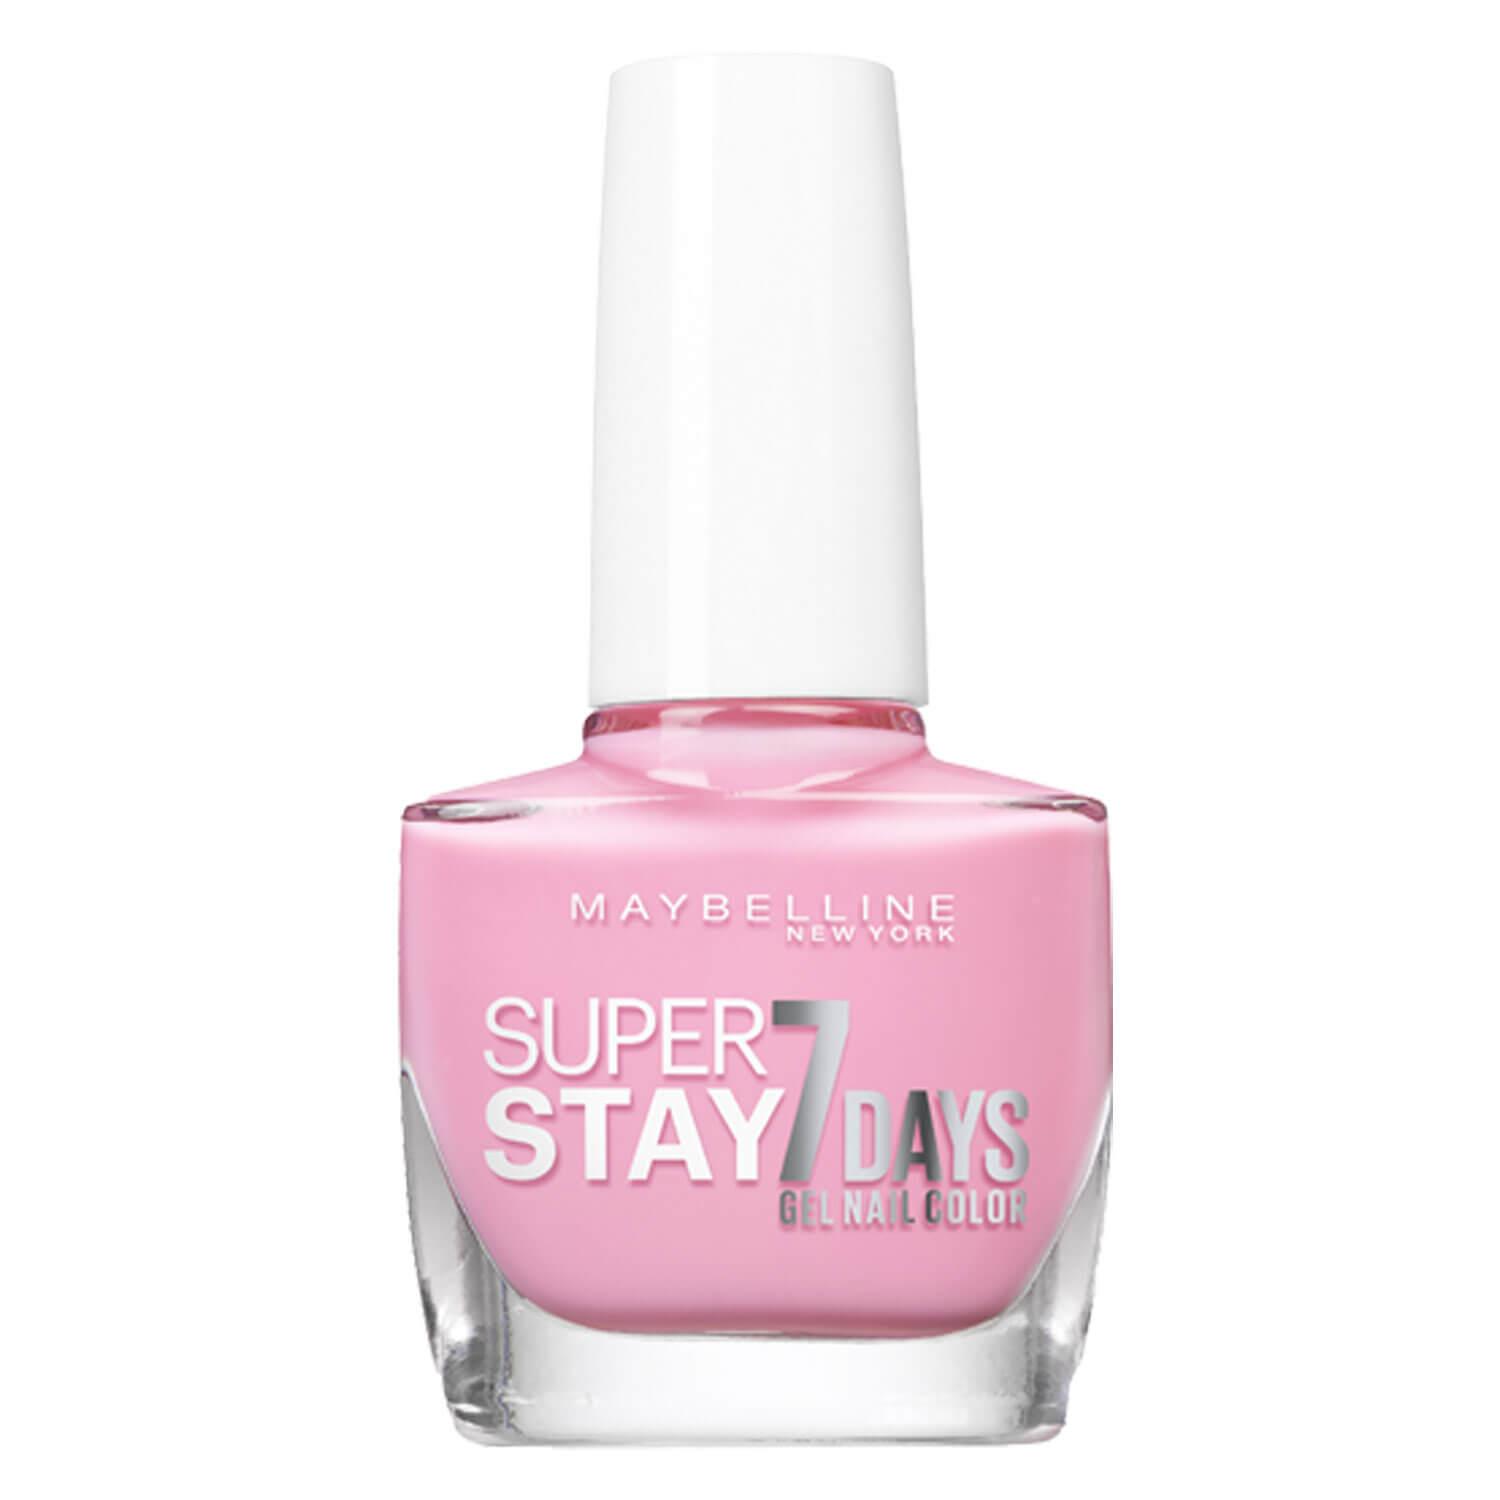 Maybelline NY Nails - Super Stay 7 Days Nagellack Nr. 120 Flushed Pink